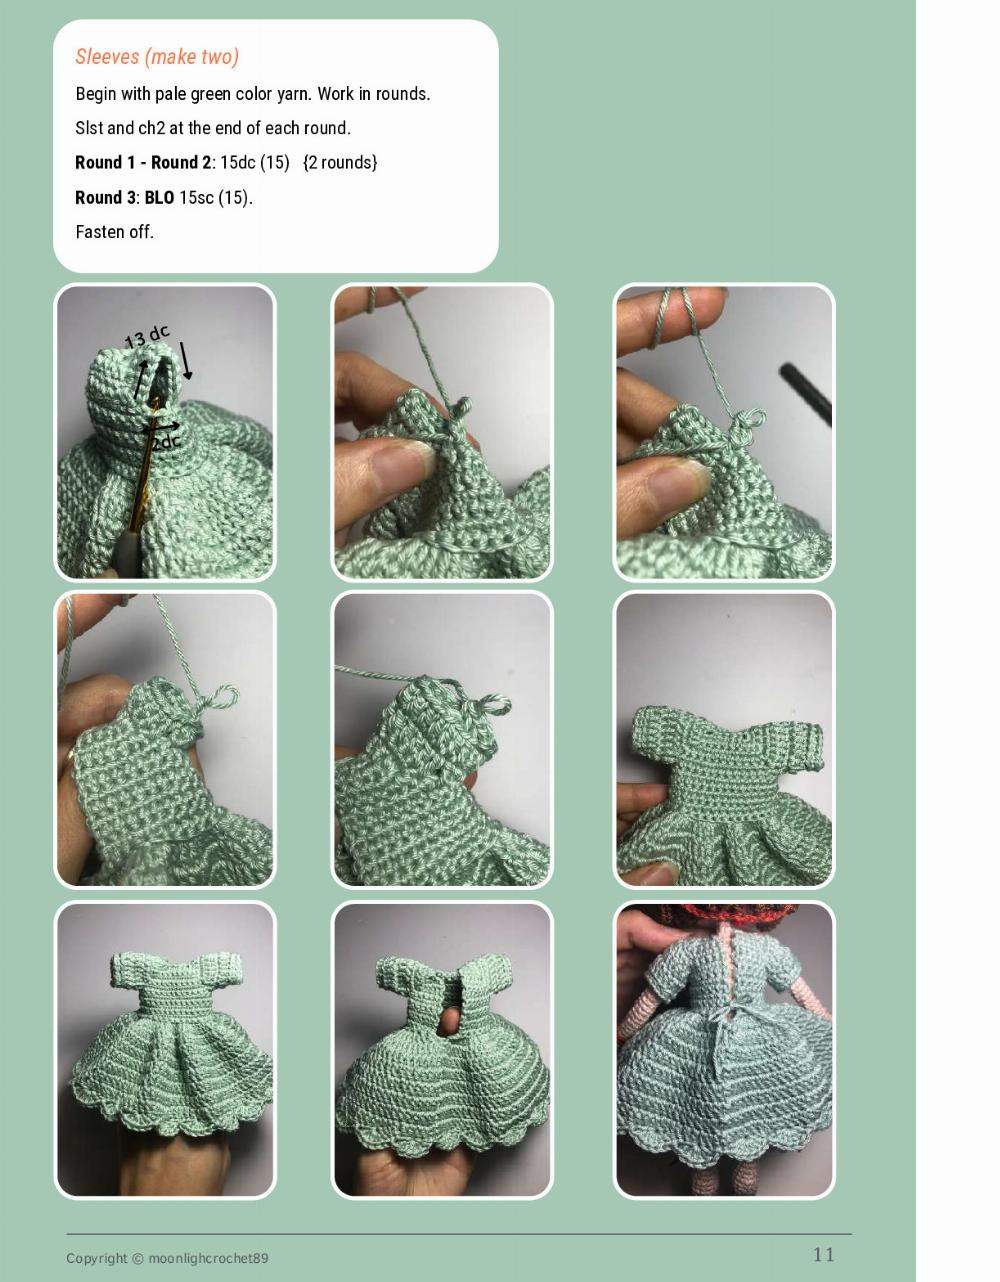 kiki doll crochet pattern